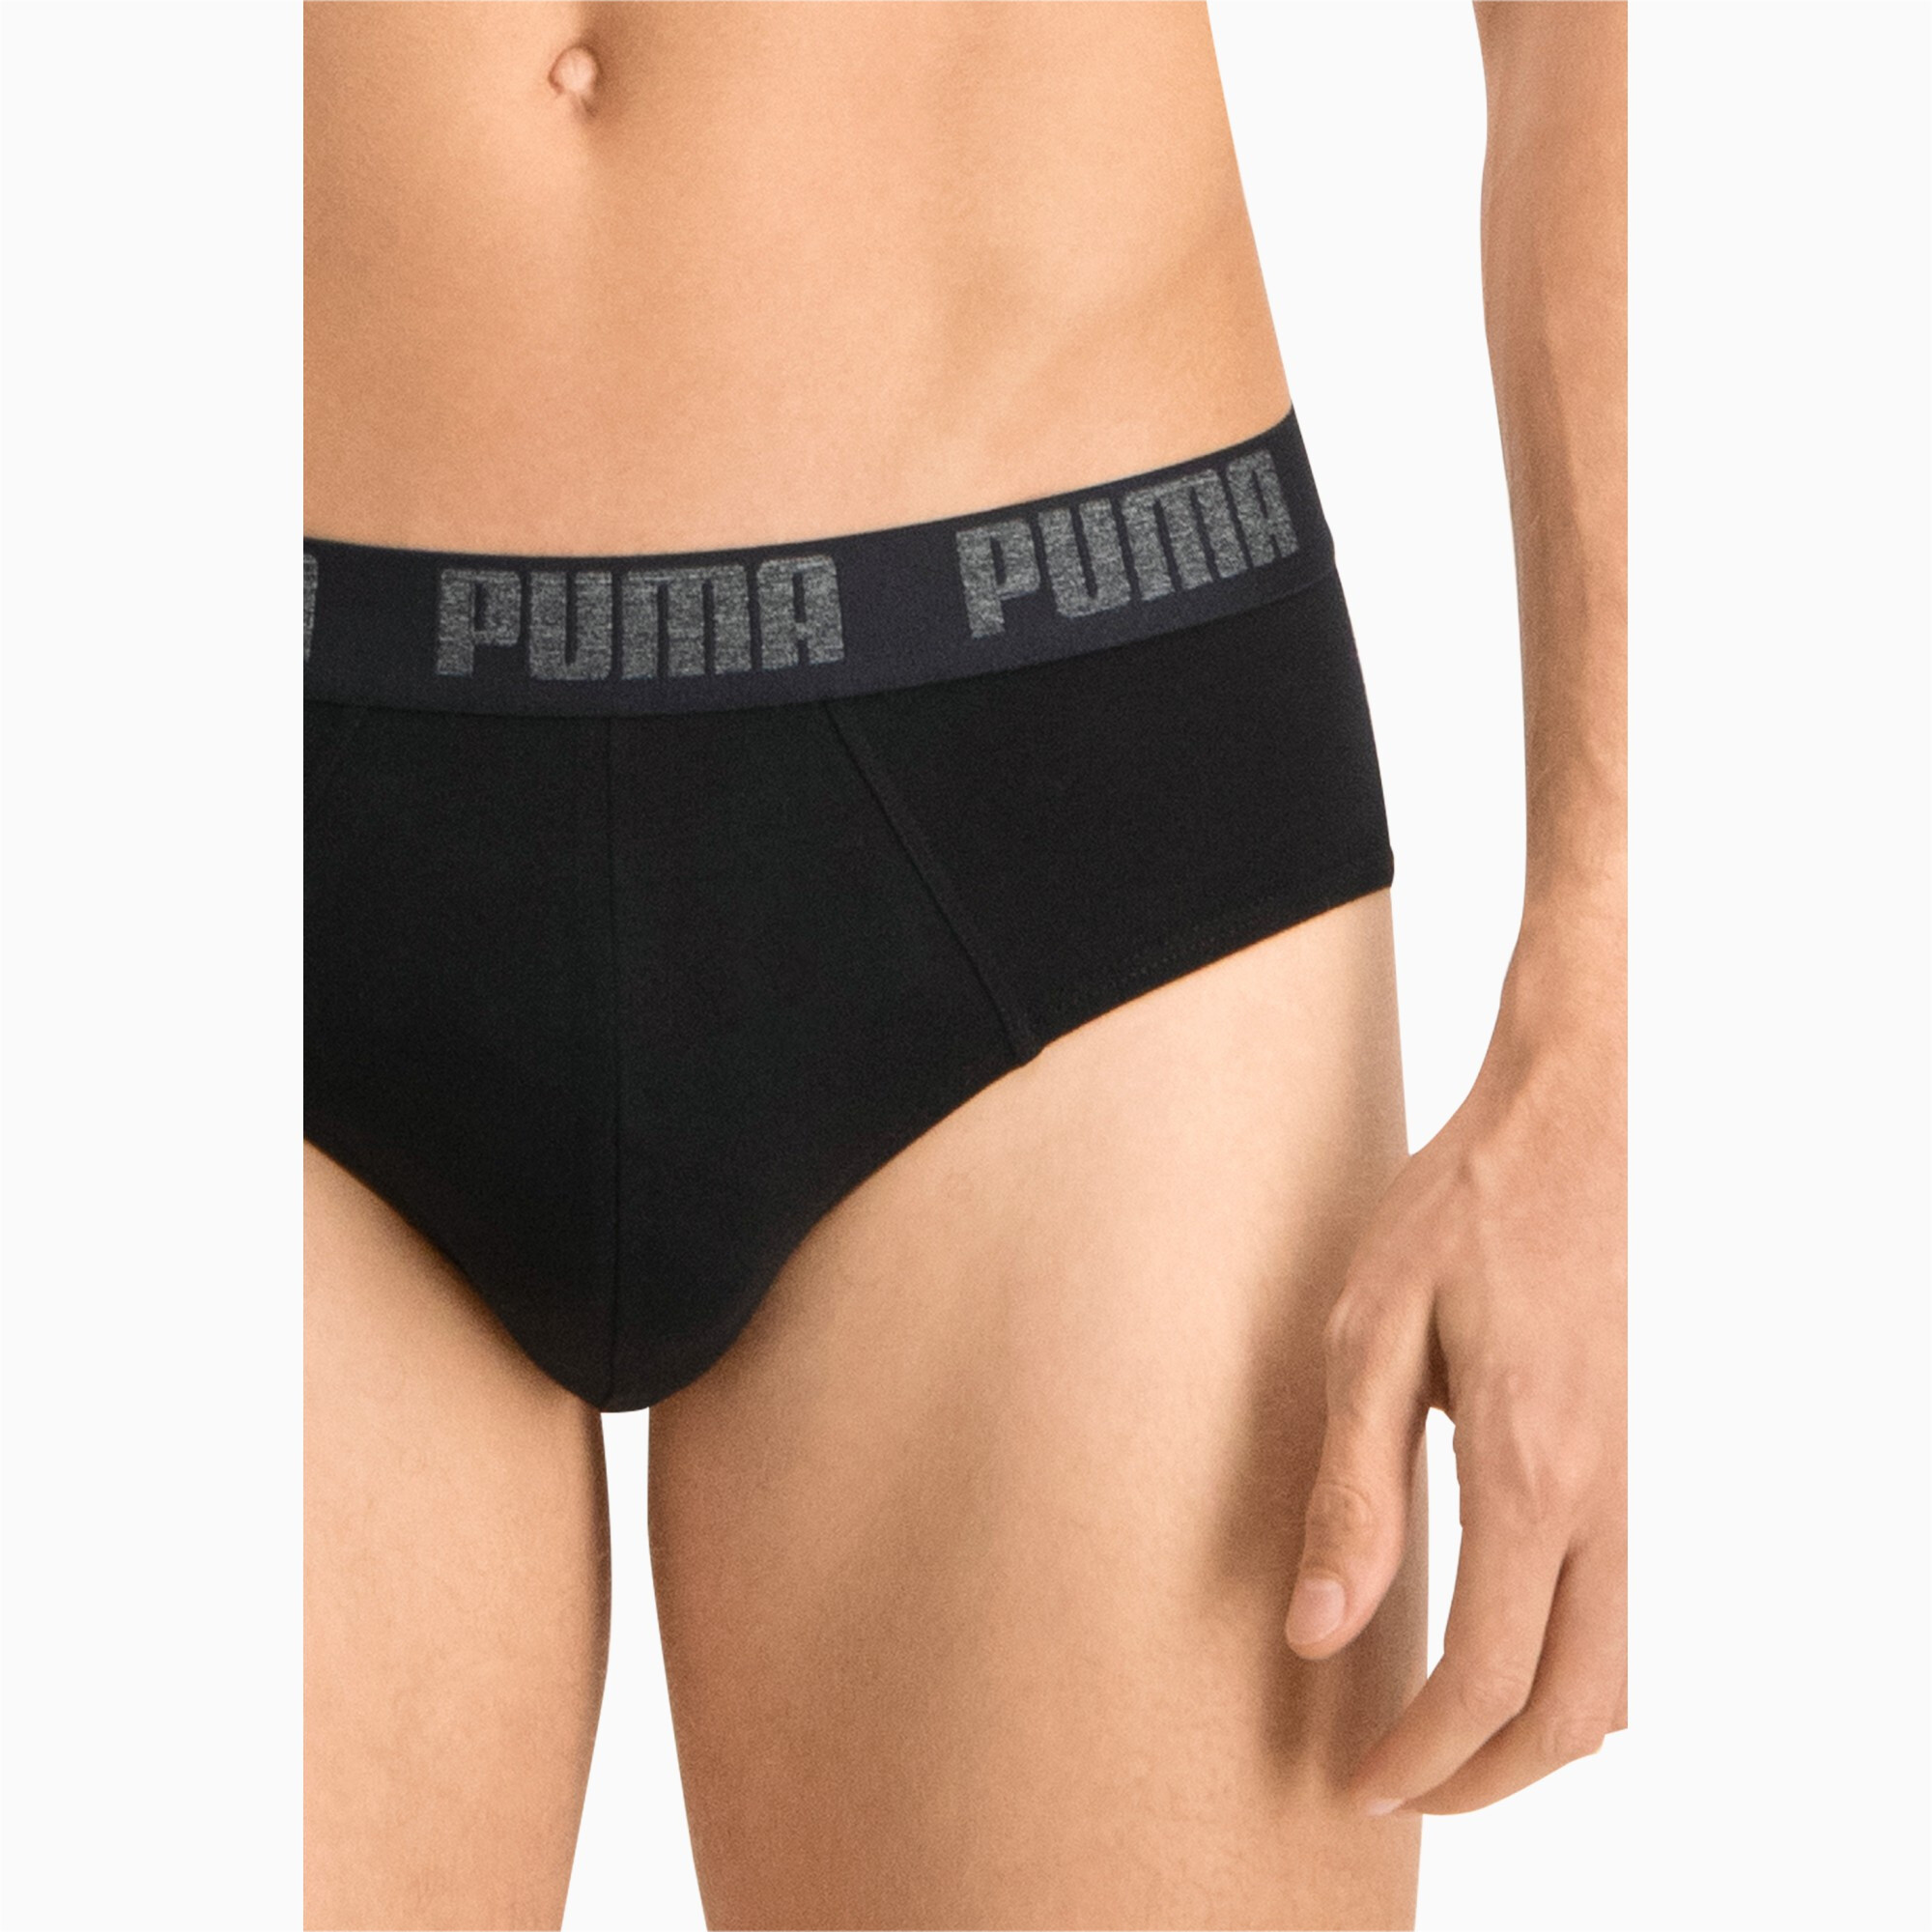 Men's PUMA Basic Briefs 2 Pack In Black, Size Medium